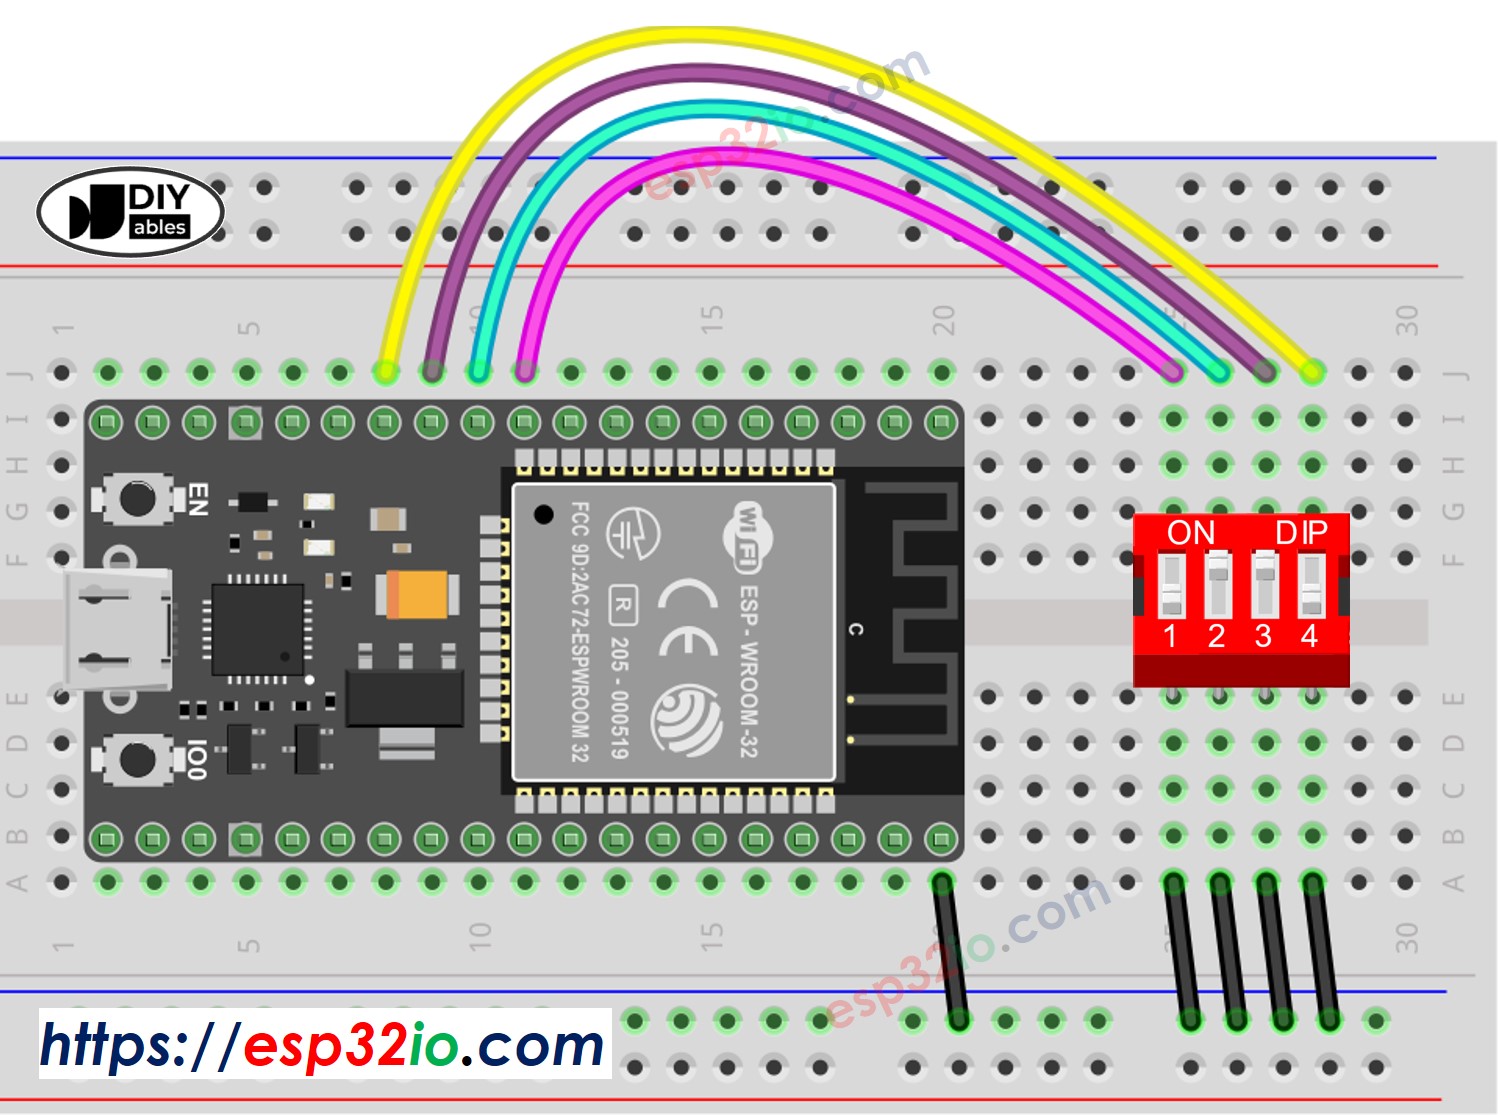 ESP32 DIP switch Wiring Diagram